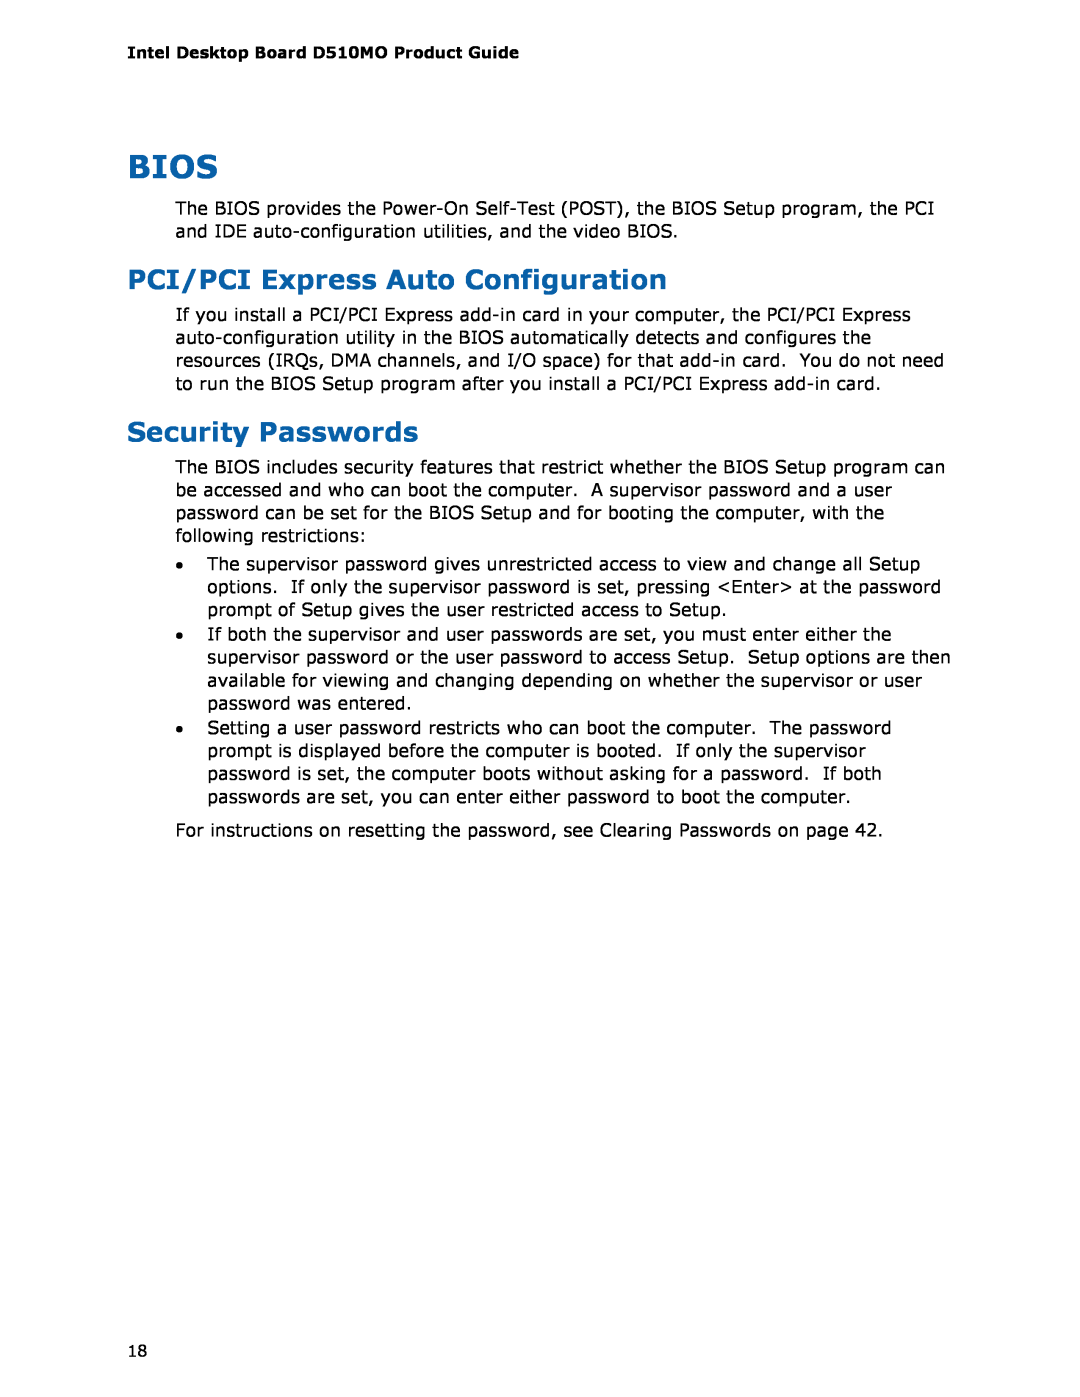 Intel D510MO manual Bios, PCI/PCI Express Auto Configuration, Security Passwords 